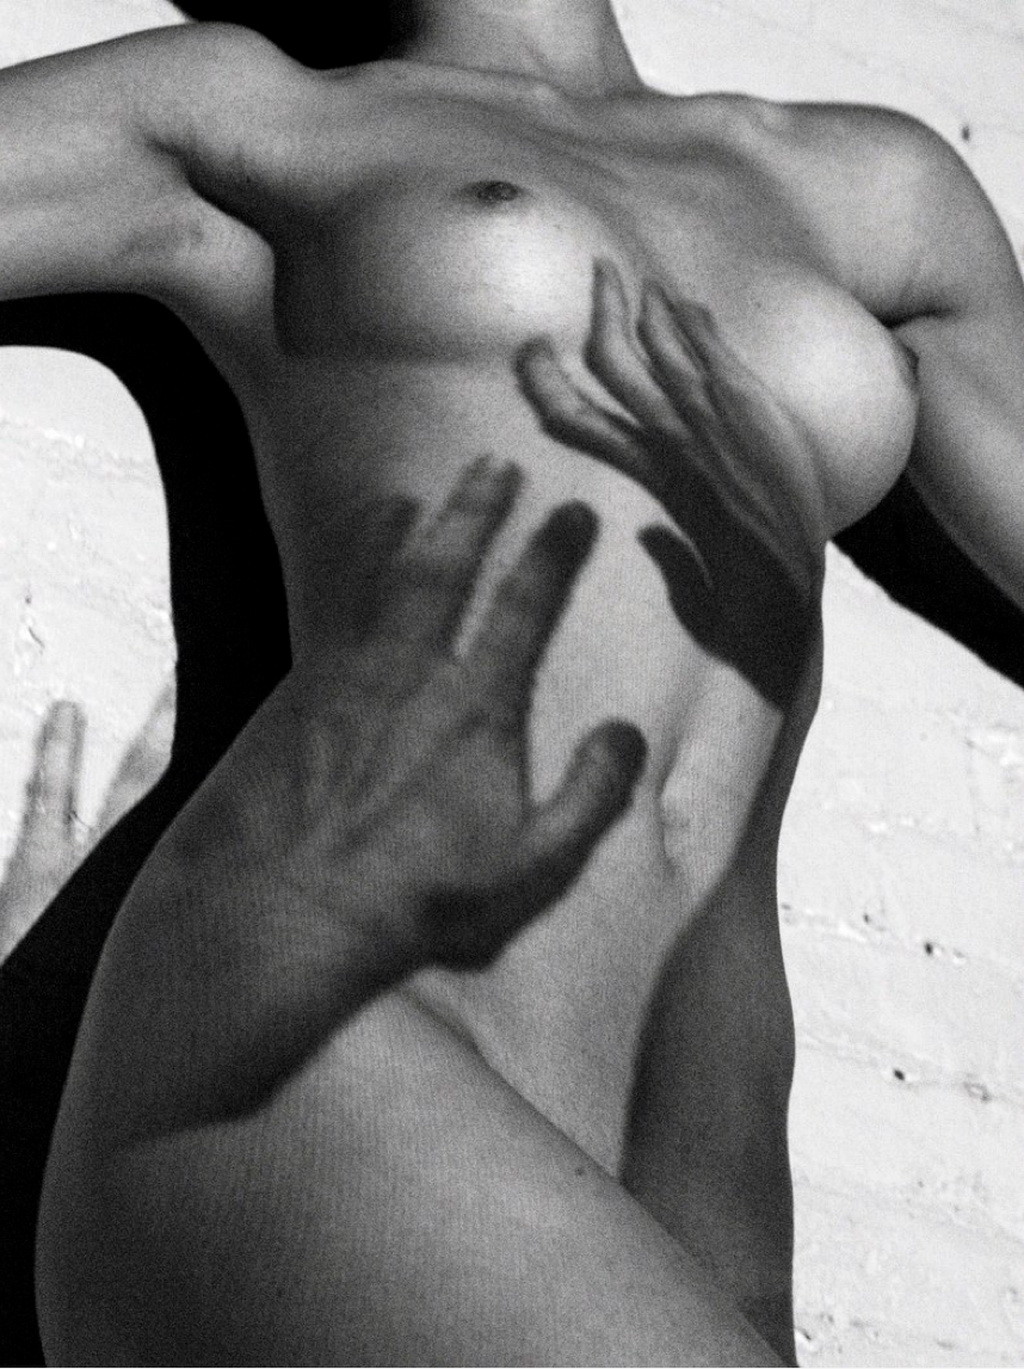 Monika jagaciak totalmente desnuda en una sesión de fotos de johan lindeberg 2015
 #75160686